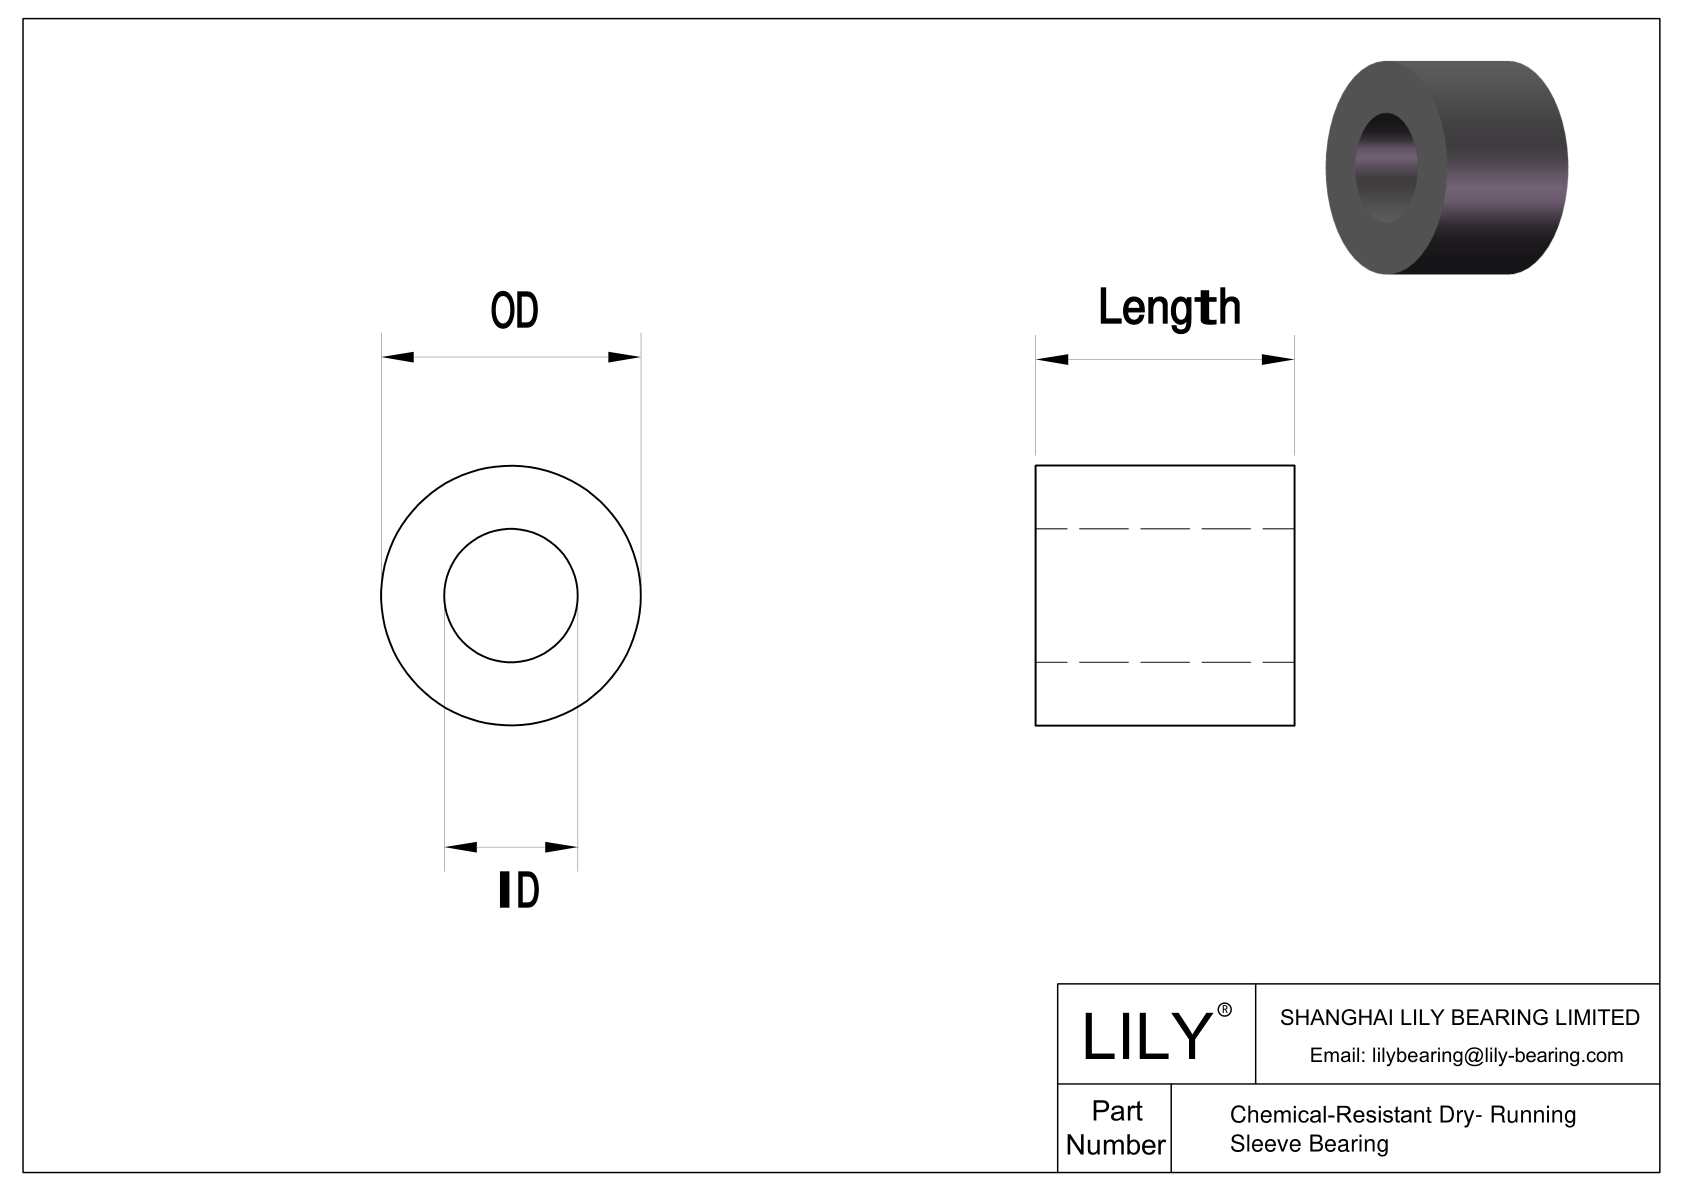 6621K115 Chemical-Resistant Dry-Running Sleeve Bearings cad drawing